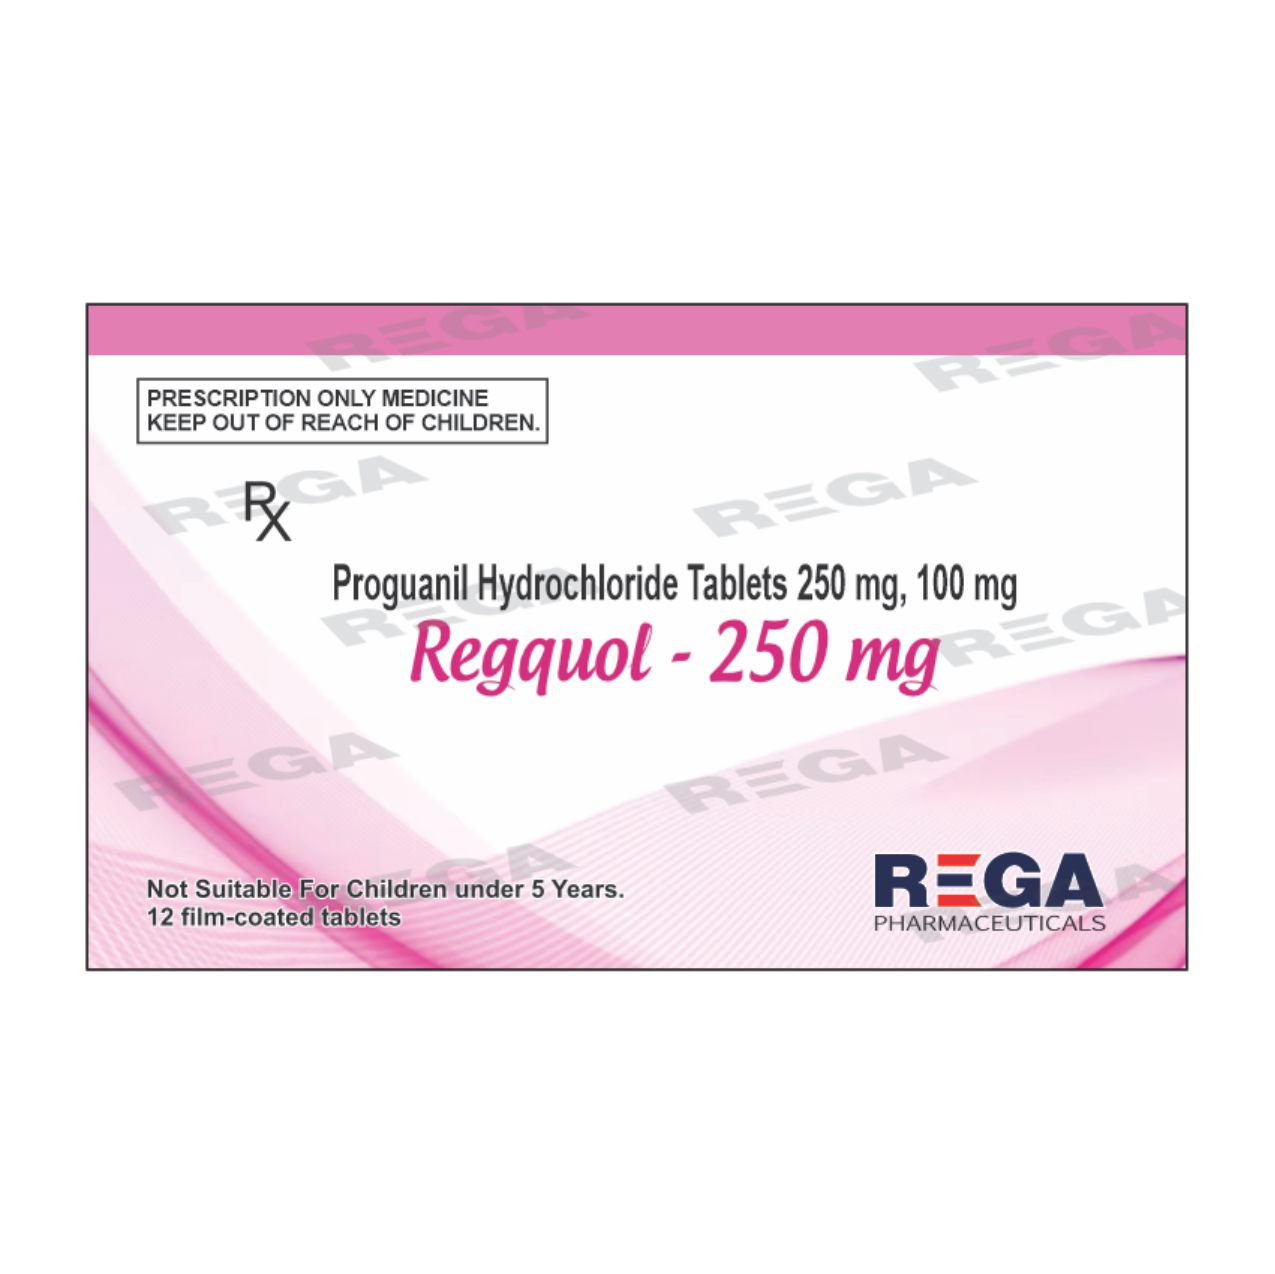 Proguanil Hydrochloride Tablets 250 mg, 100 mg